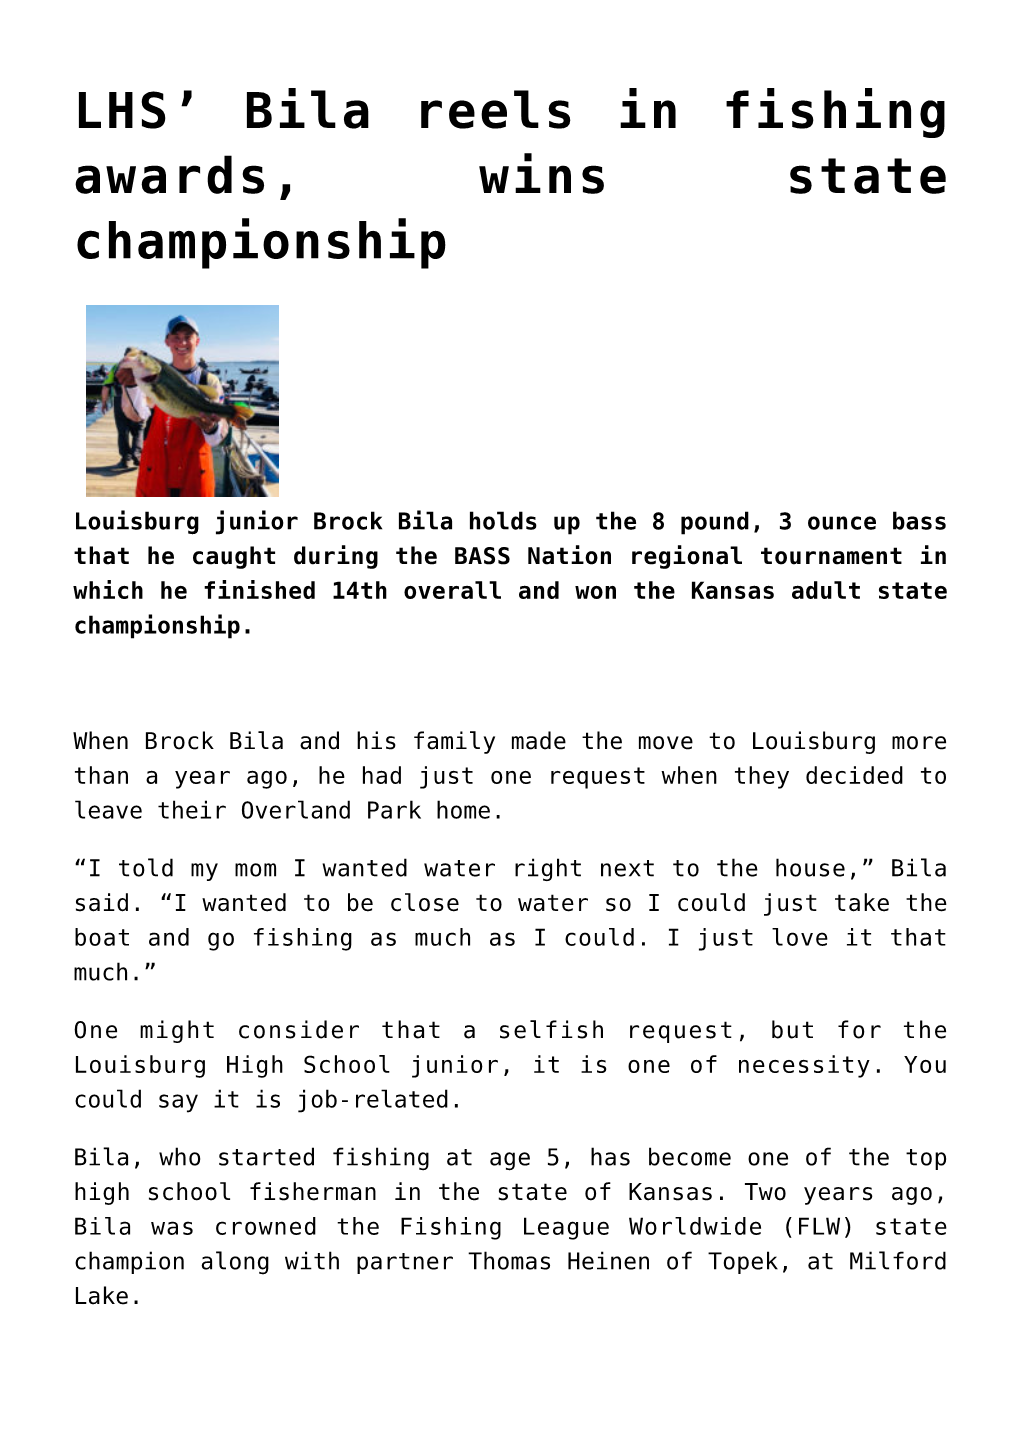 Bila Reels in Fishing Awards, Wins State Championship